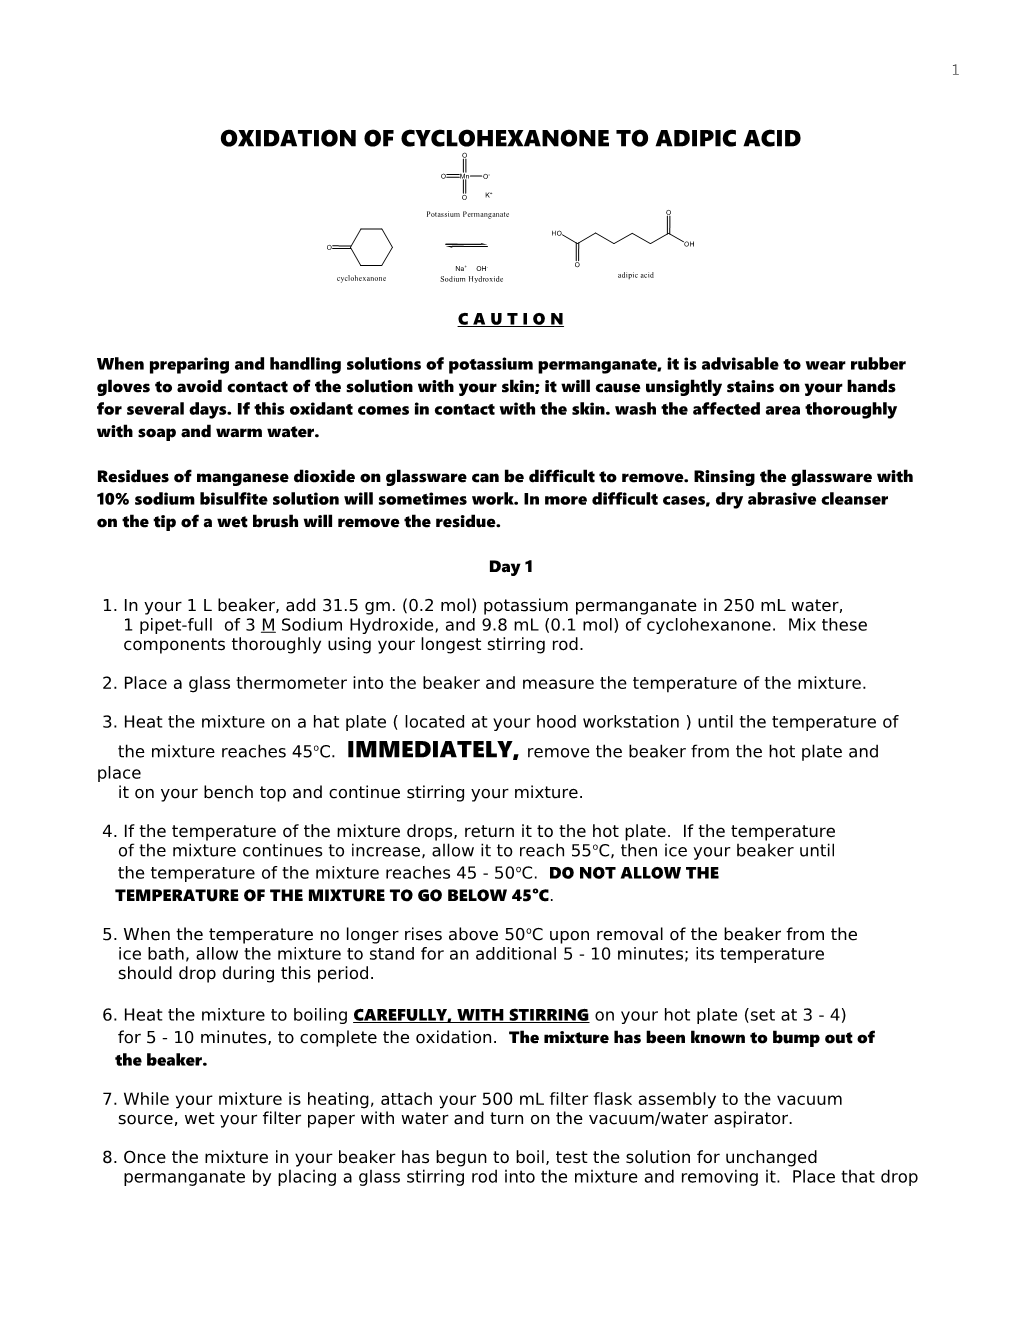 Oxidation of Cyclohexanone to Adipic Acid